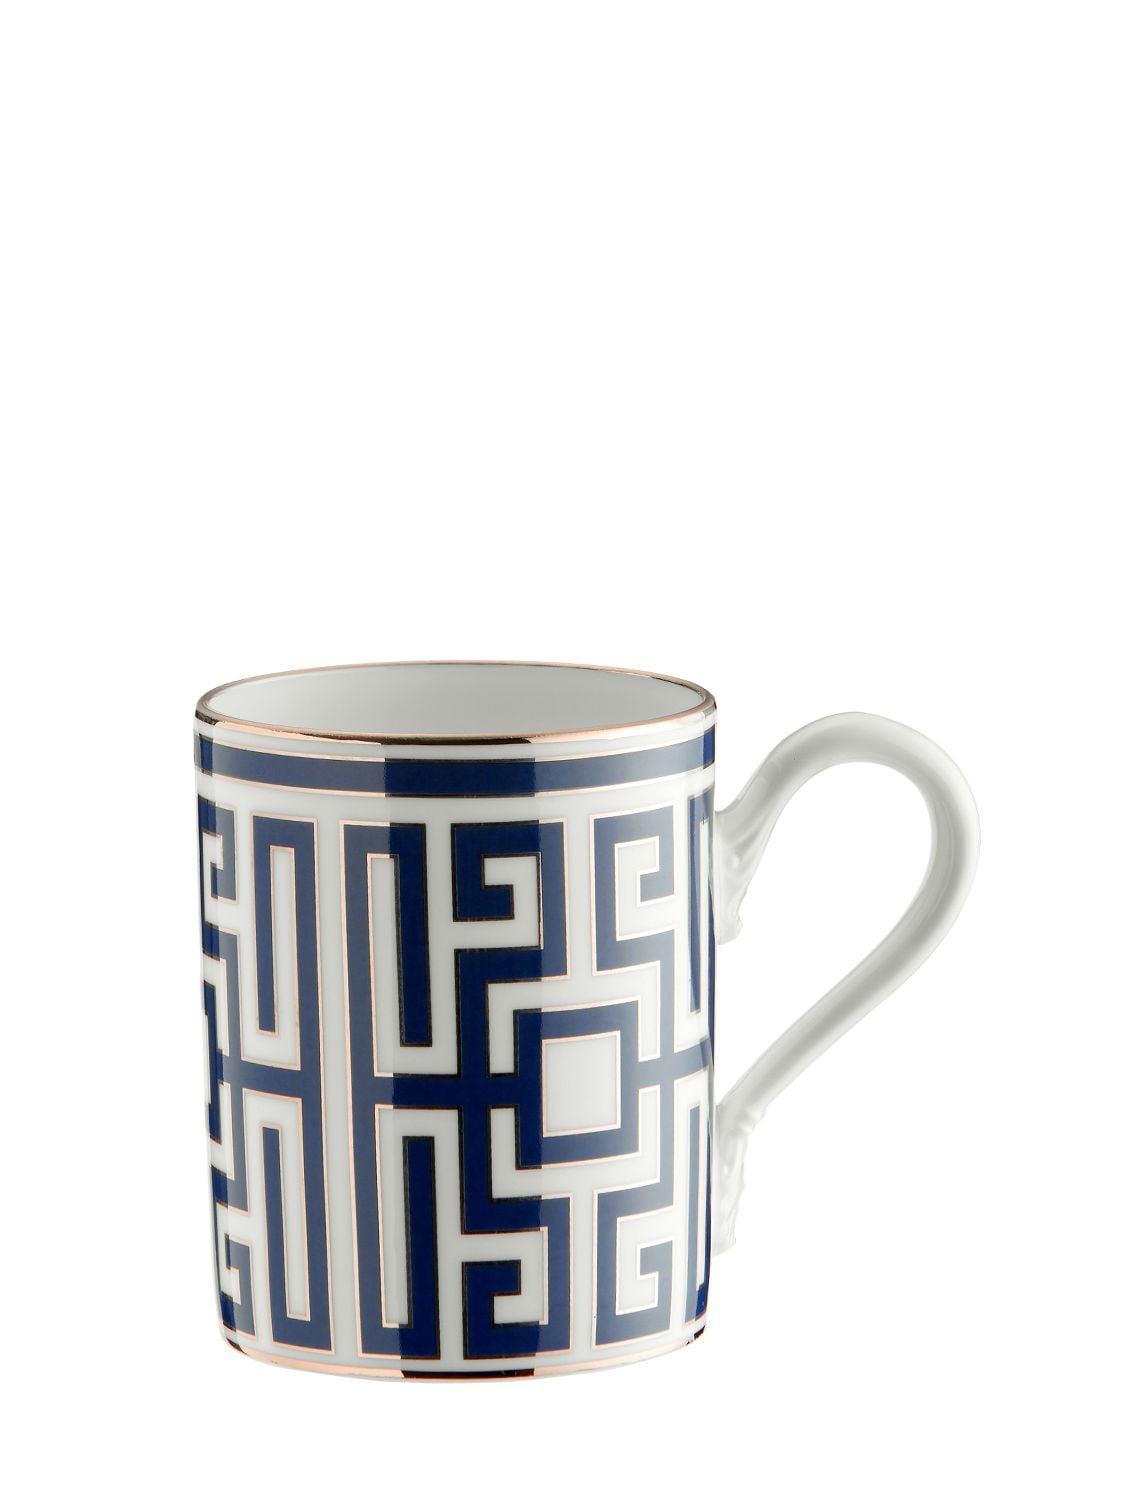 Ginori 1735 Labirinto Porcelain Mug In Blue